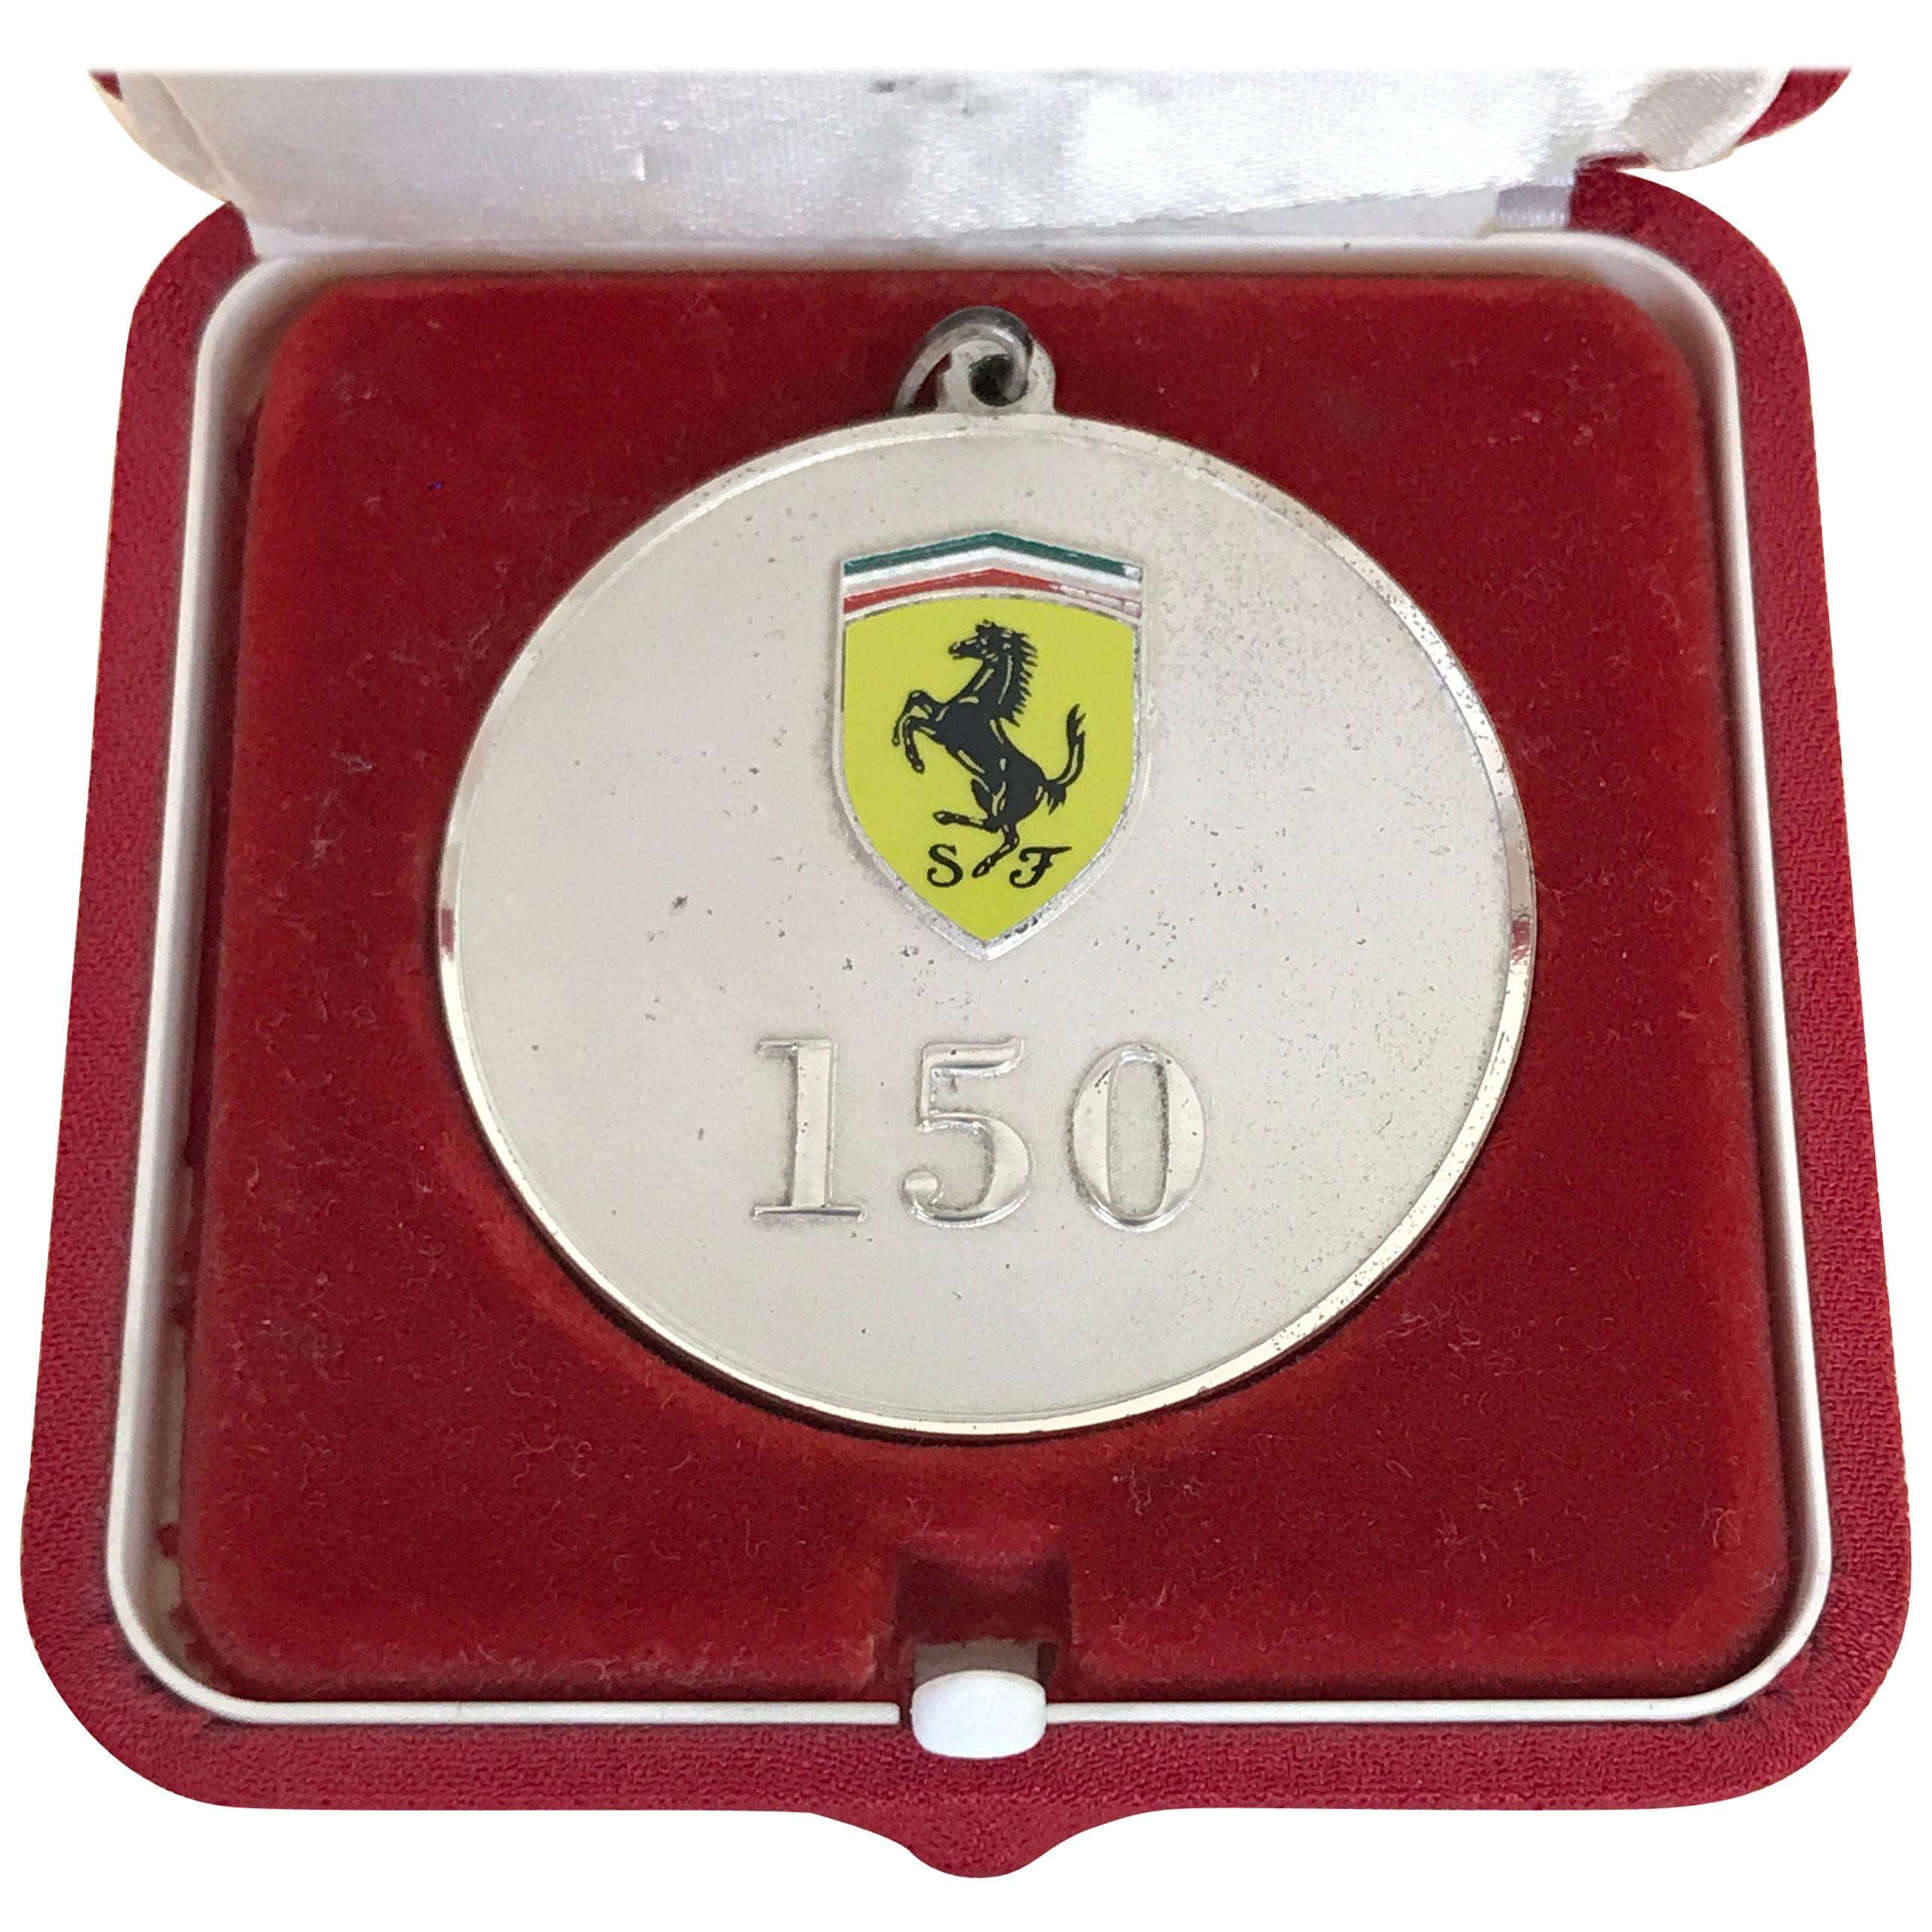 2002 Vintage Ferrari Commemorative Medal Celebrating the 150th Victory of GP For Sale